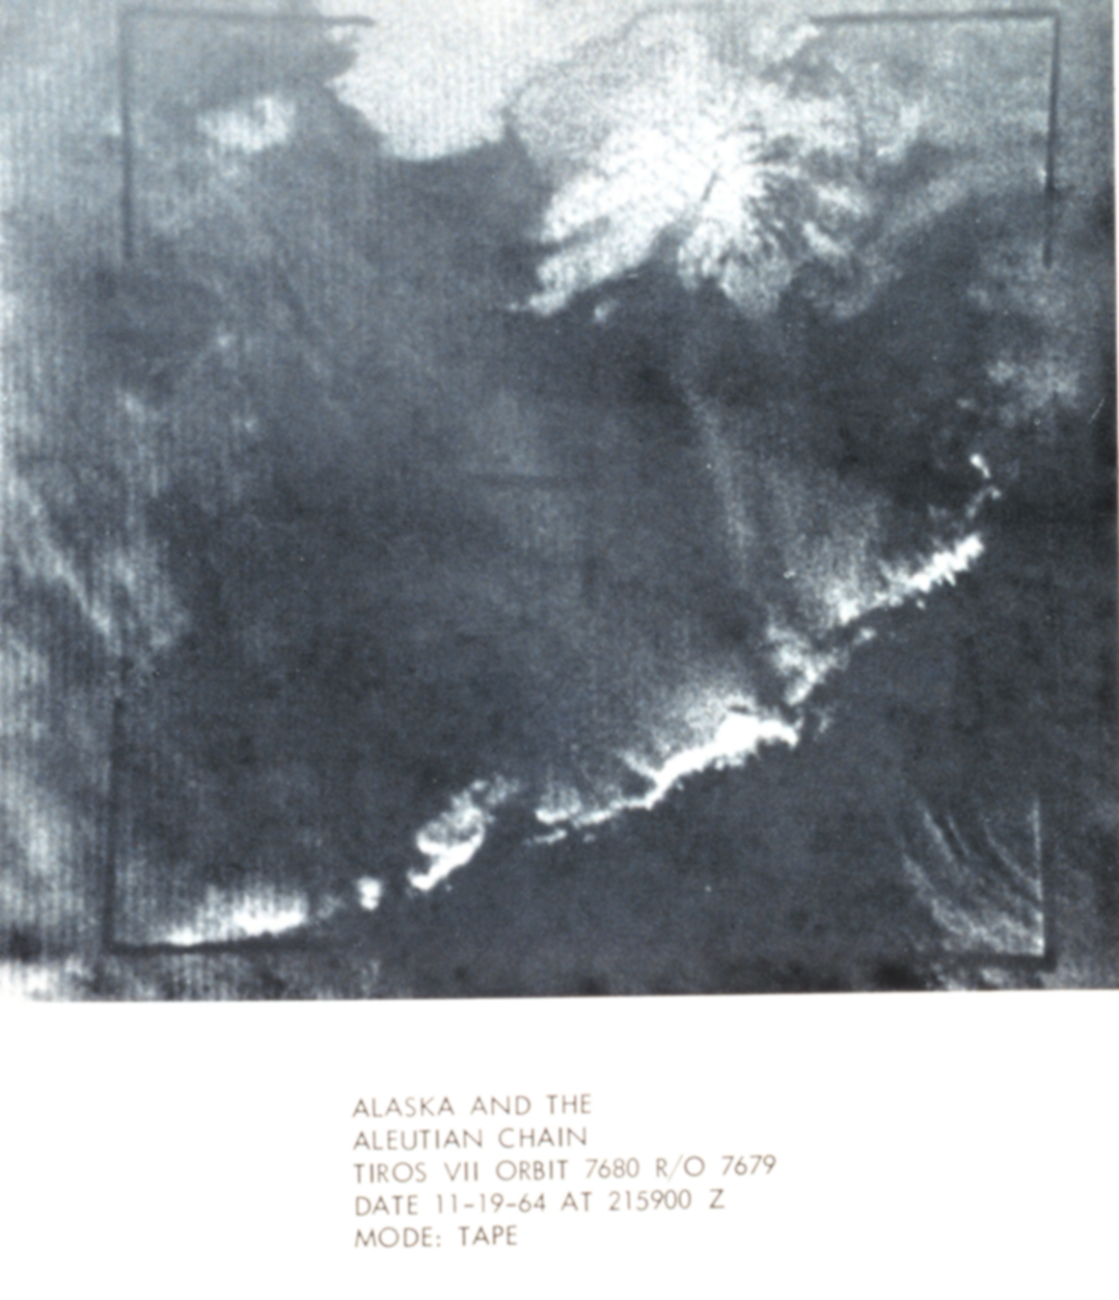 TIROS VII orbit 7680 R/O 7679  image of Alaska and the Aleutian Islands